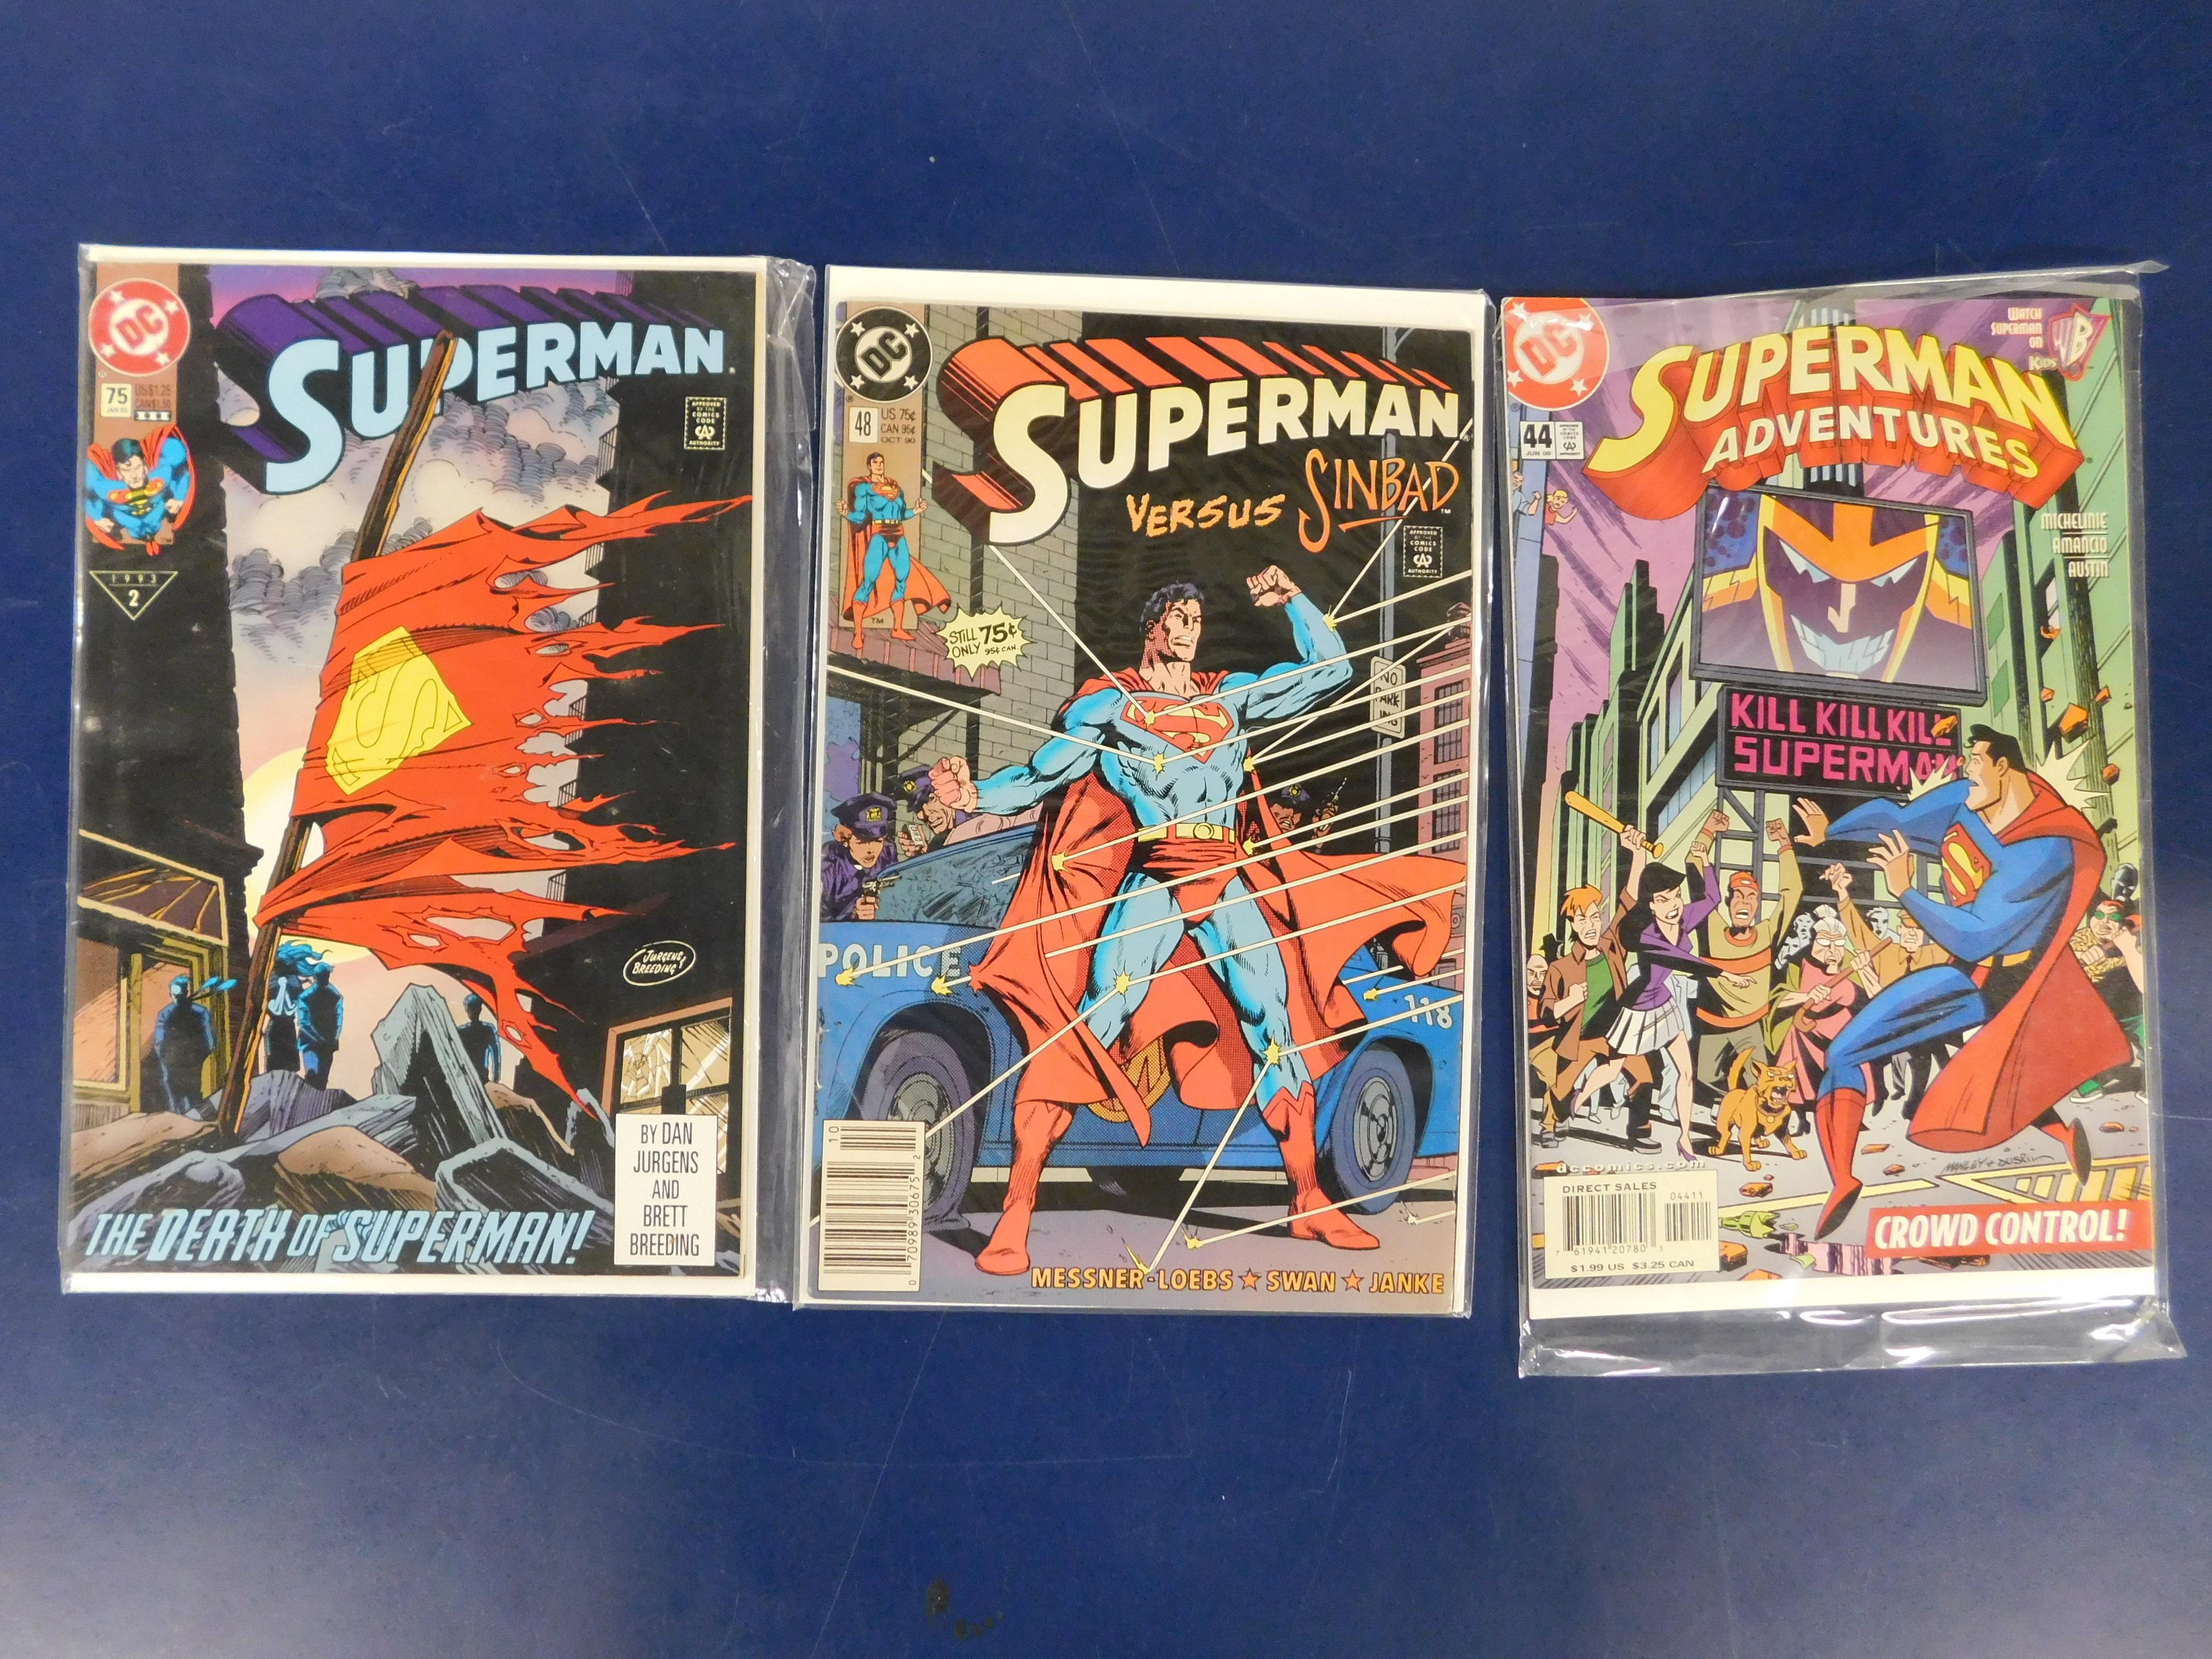 (18)  ASSORTED SUPERMAN COMICS - DC COMIC